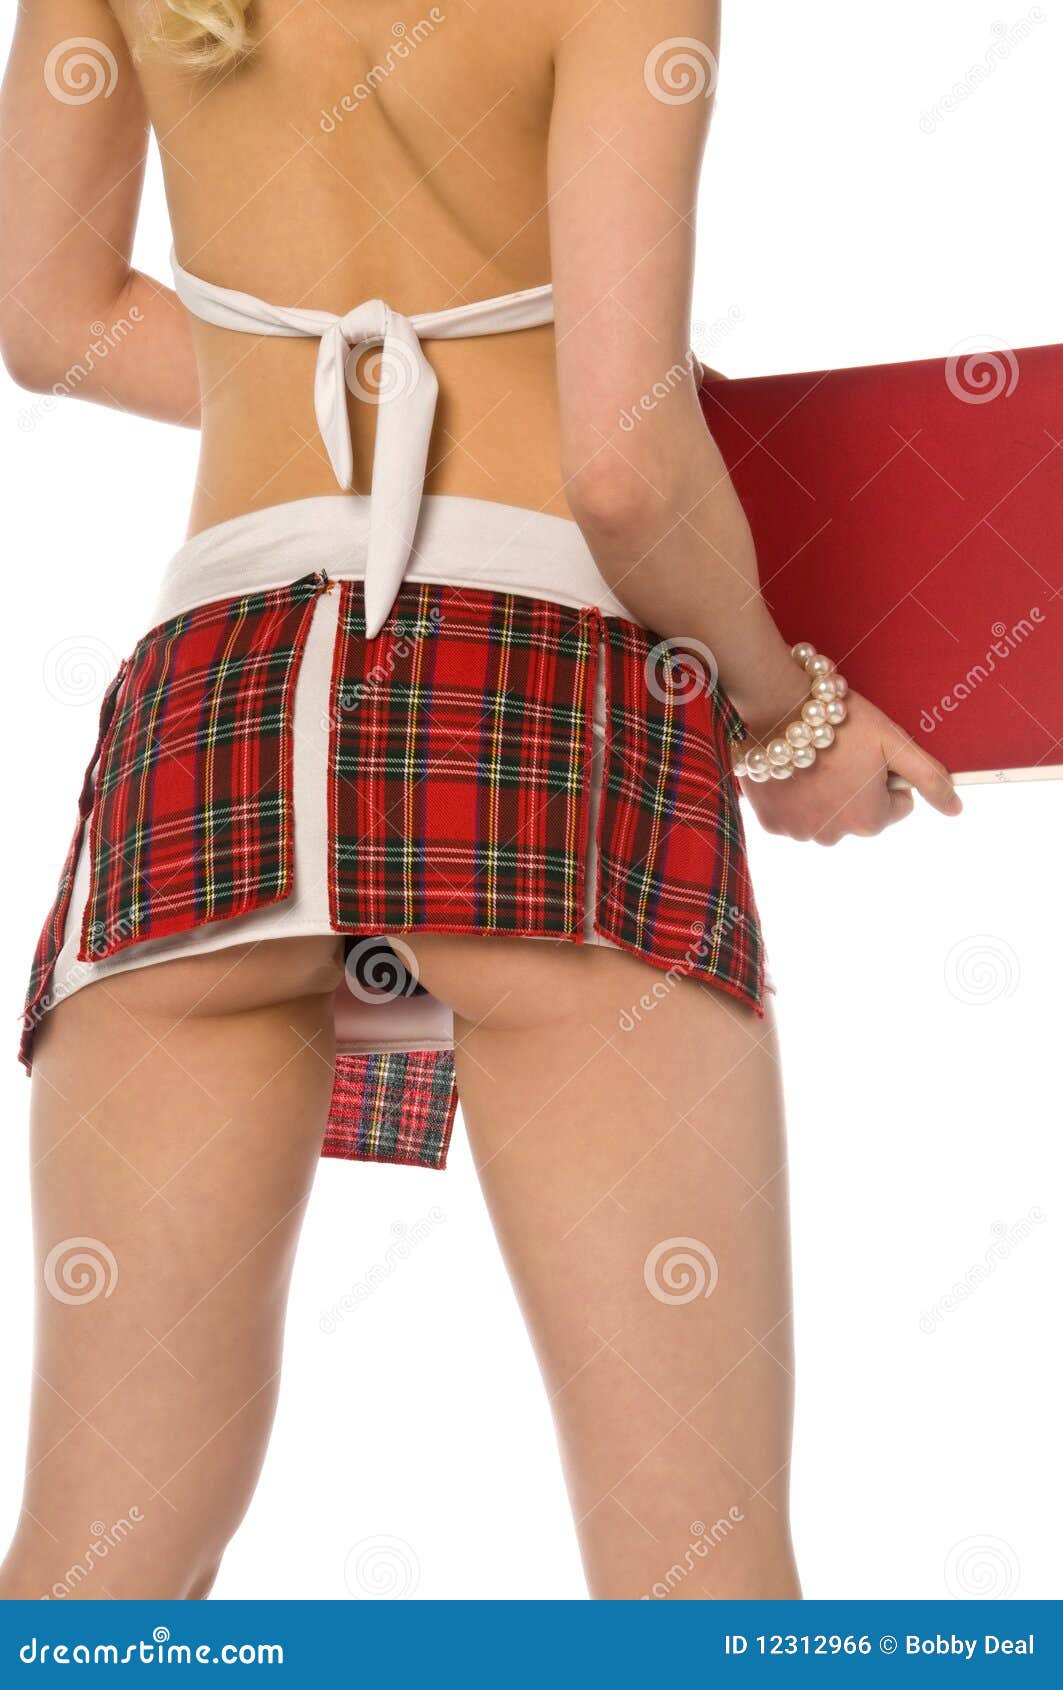 Catholic school girl panties